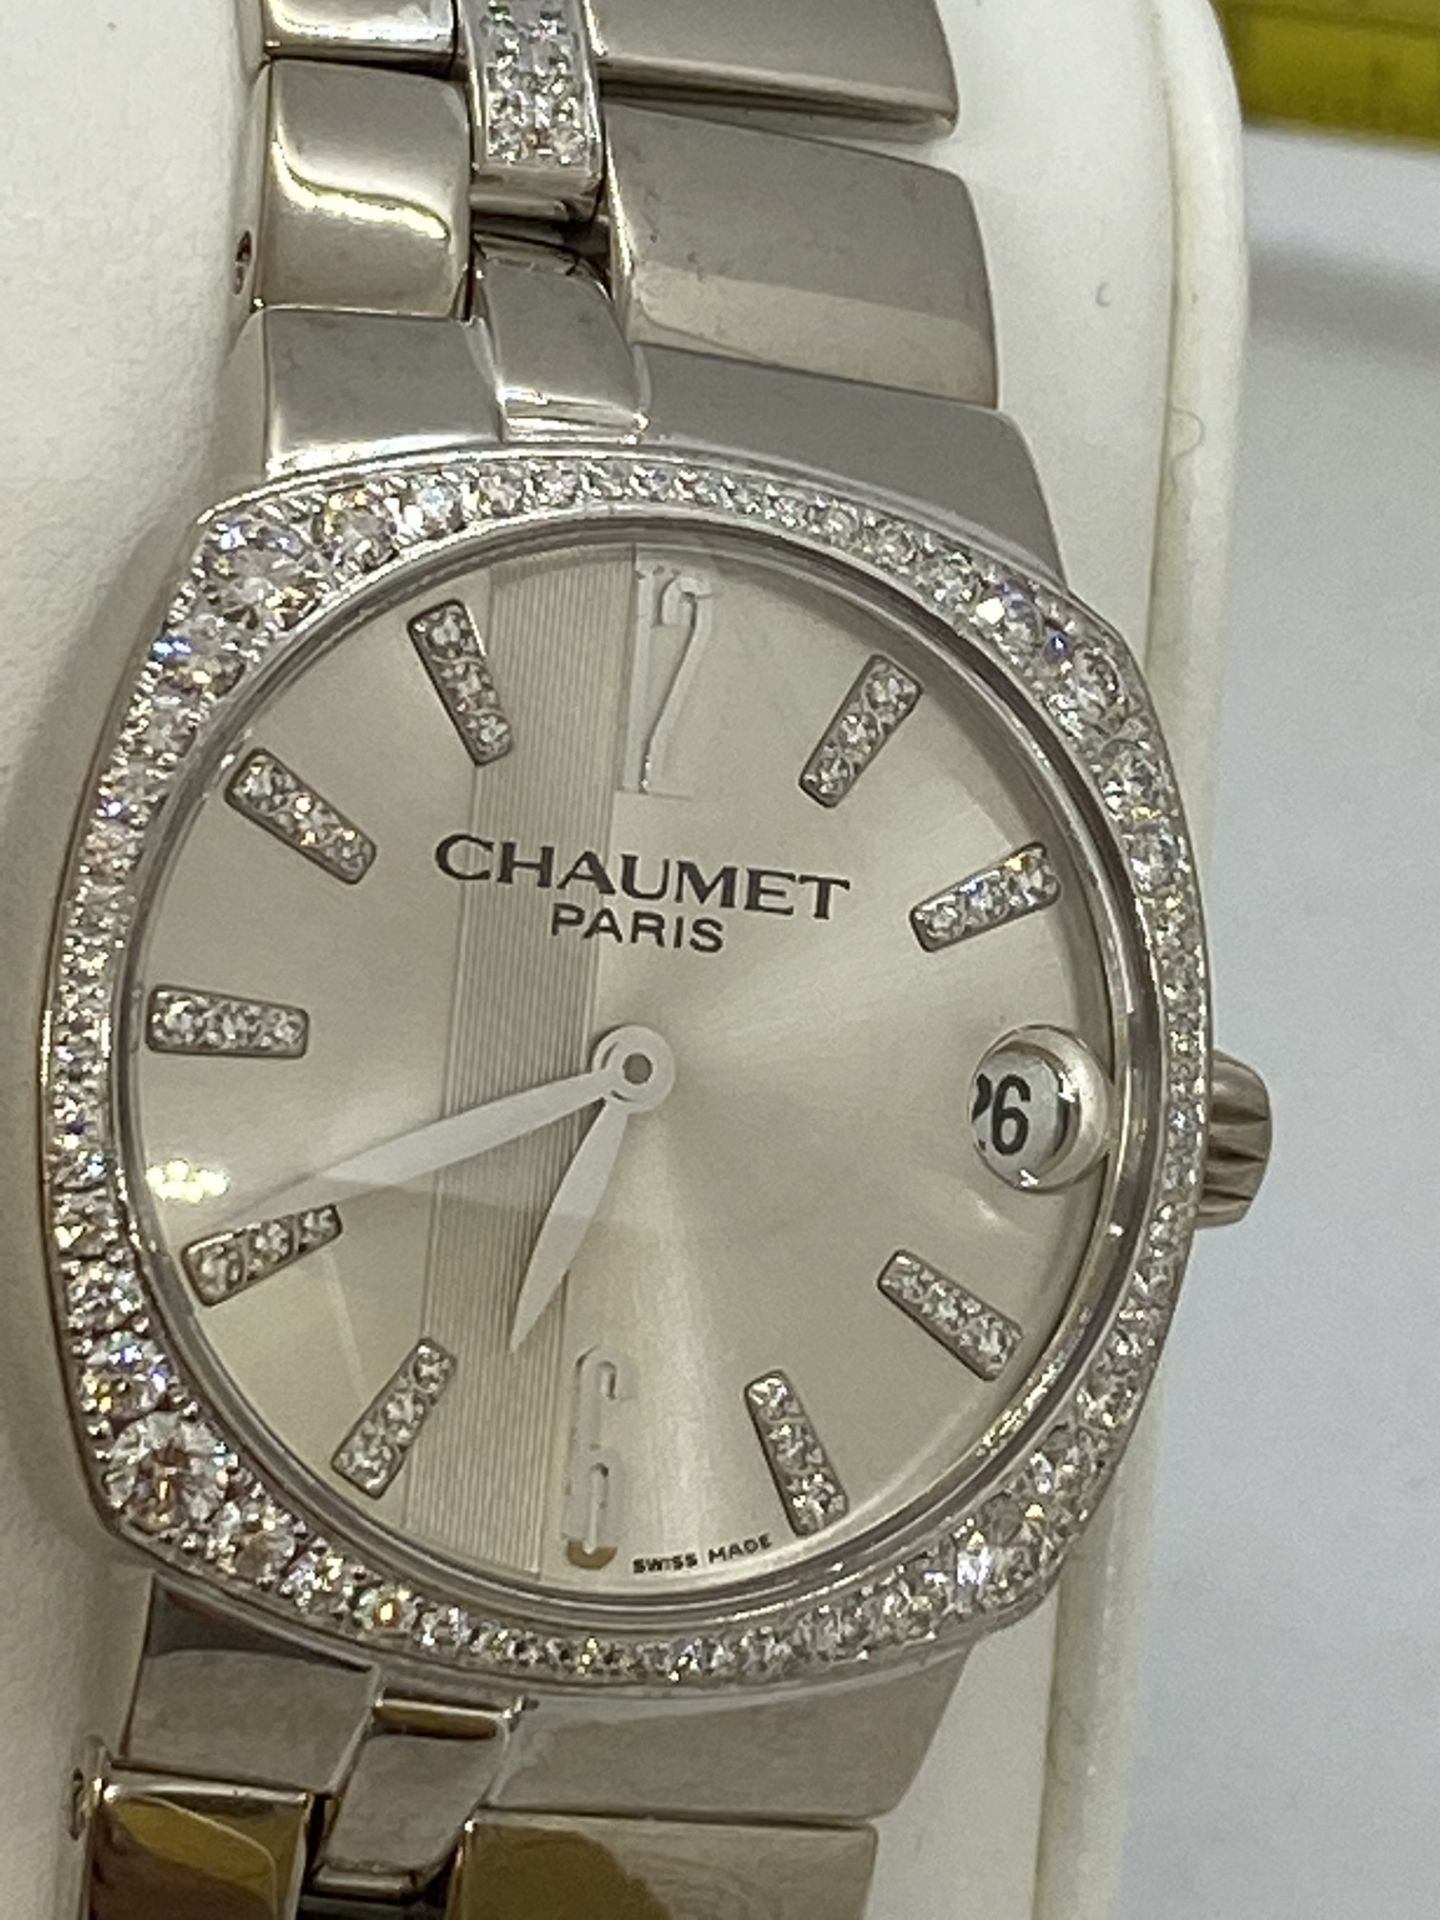 18ct WHITE GOLD CHAUMET PARIS DIAMOND SET WATCH - APPROX 115g - Image 3 of 11